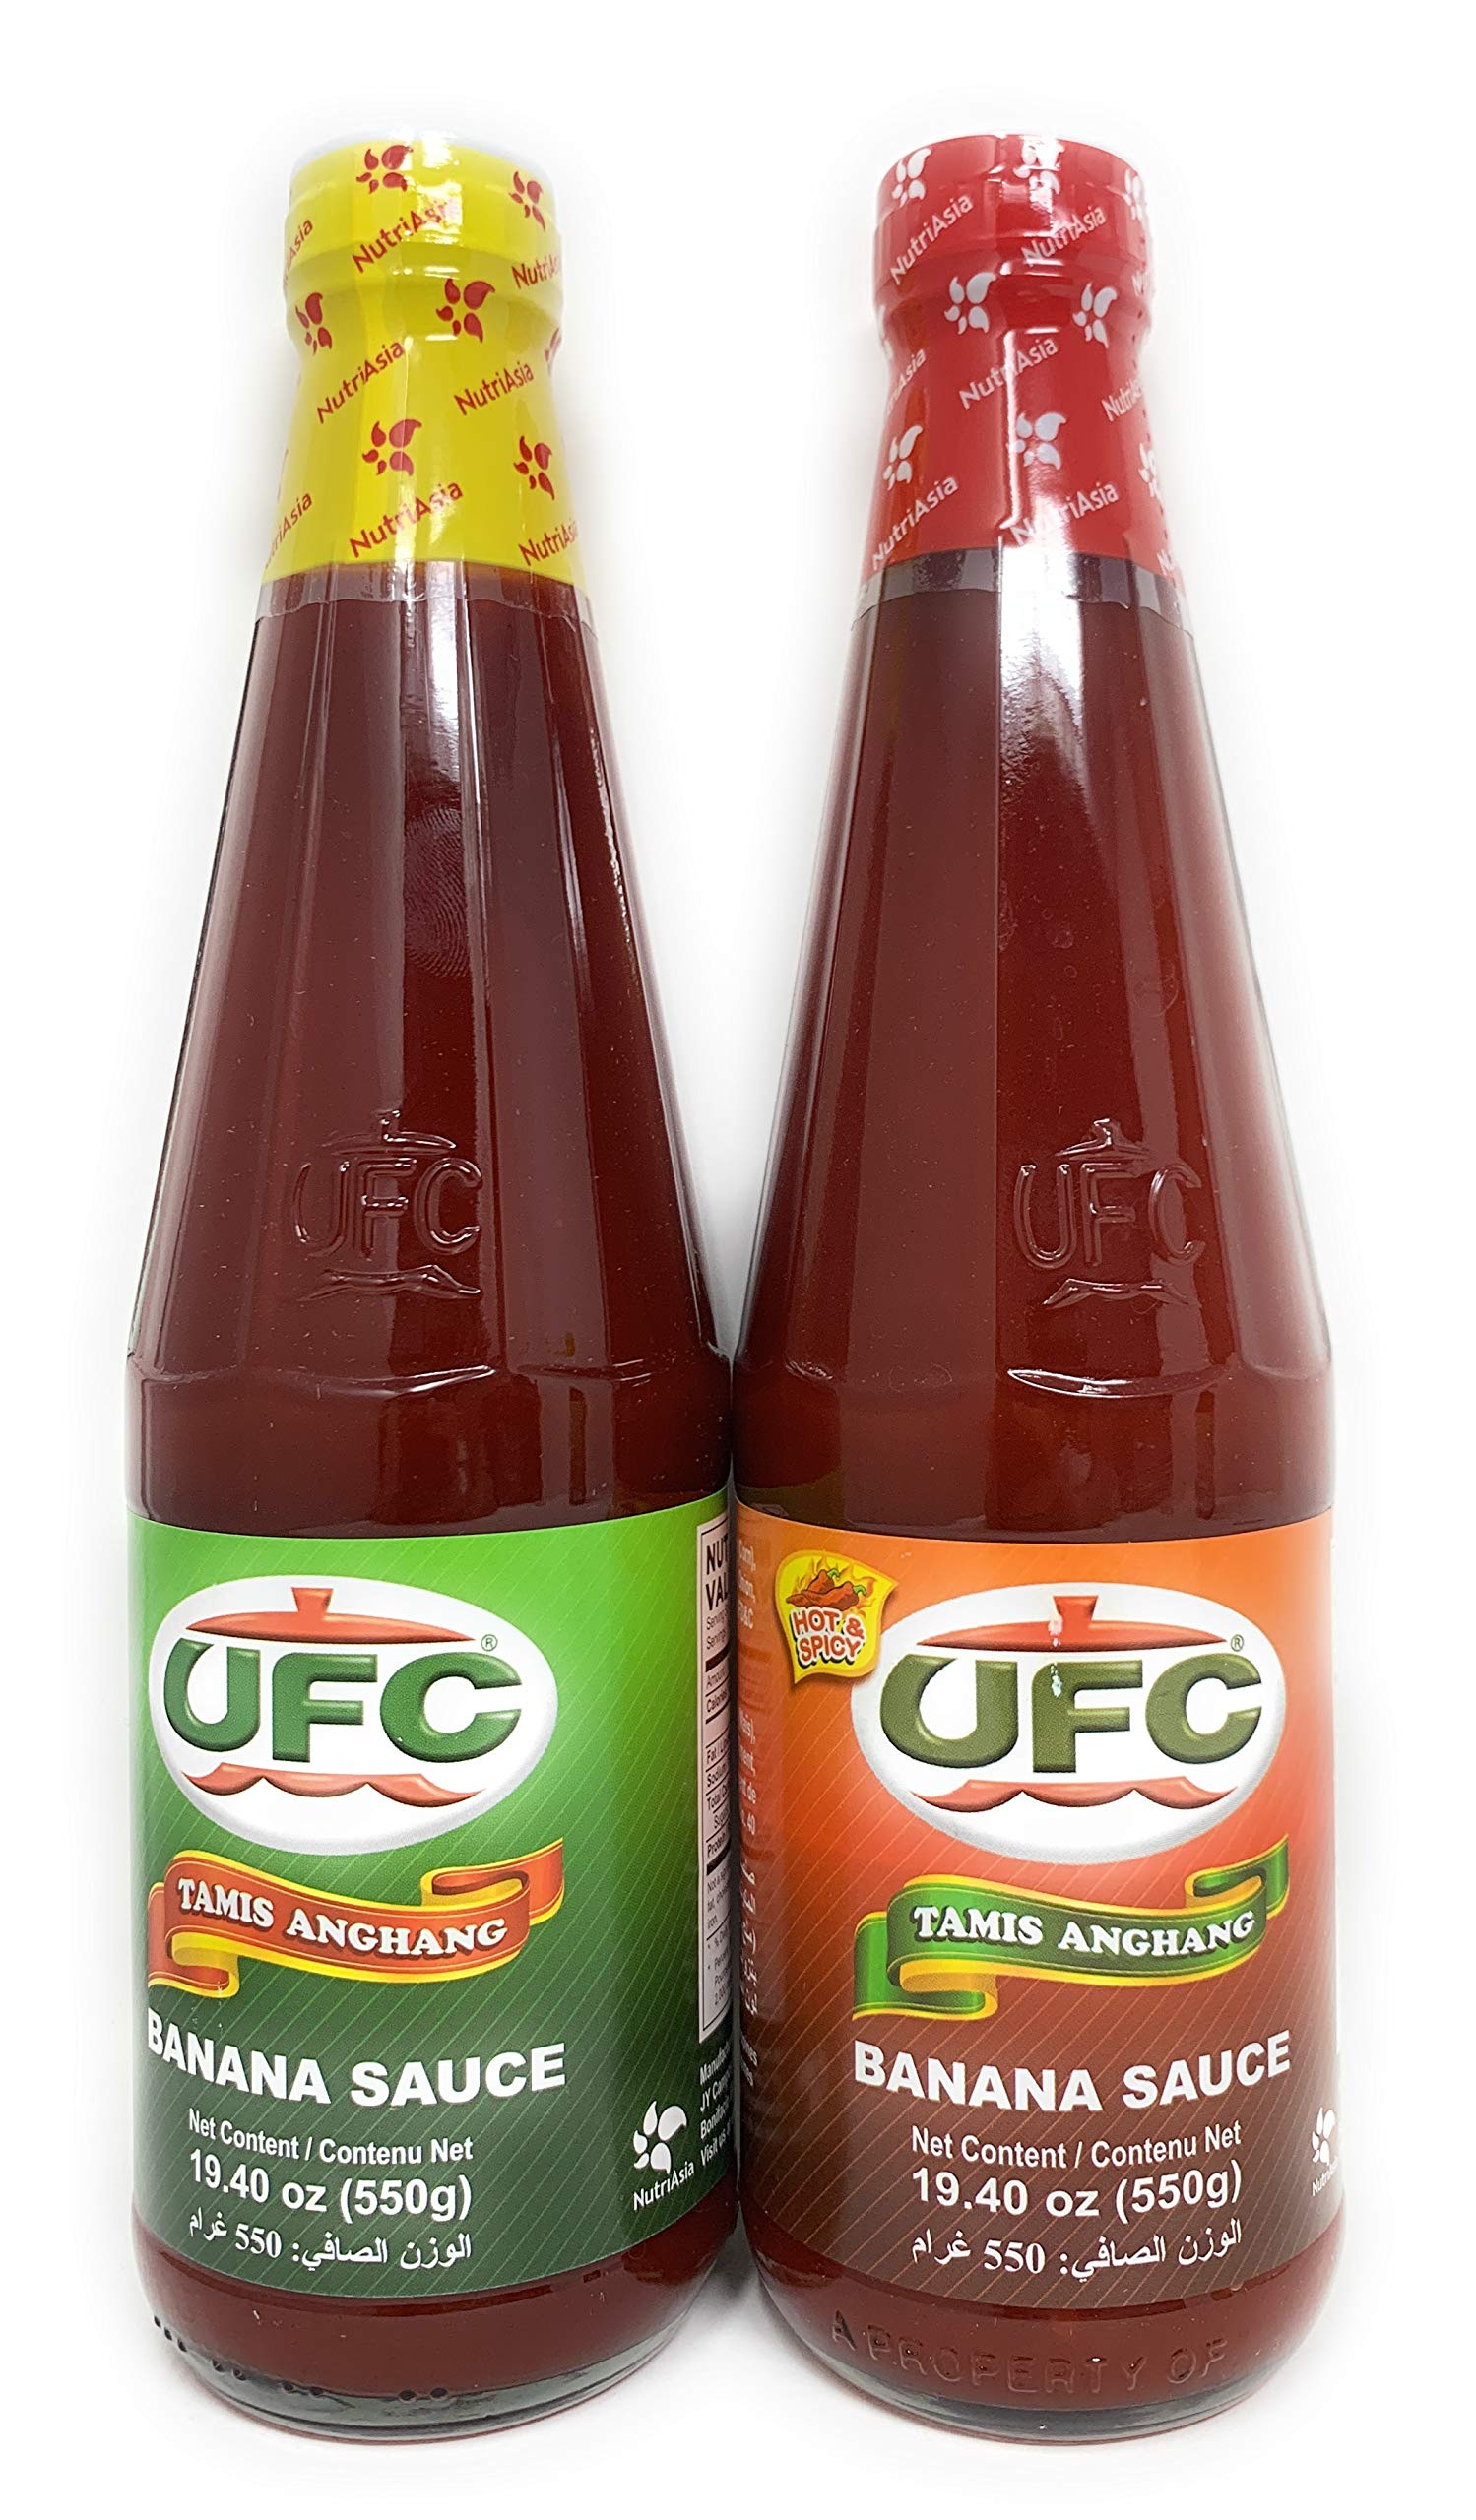 UFC Tamis Anghang Banana Sauce Bundle - Regular, Hot & Spicy, 2 Pack